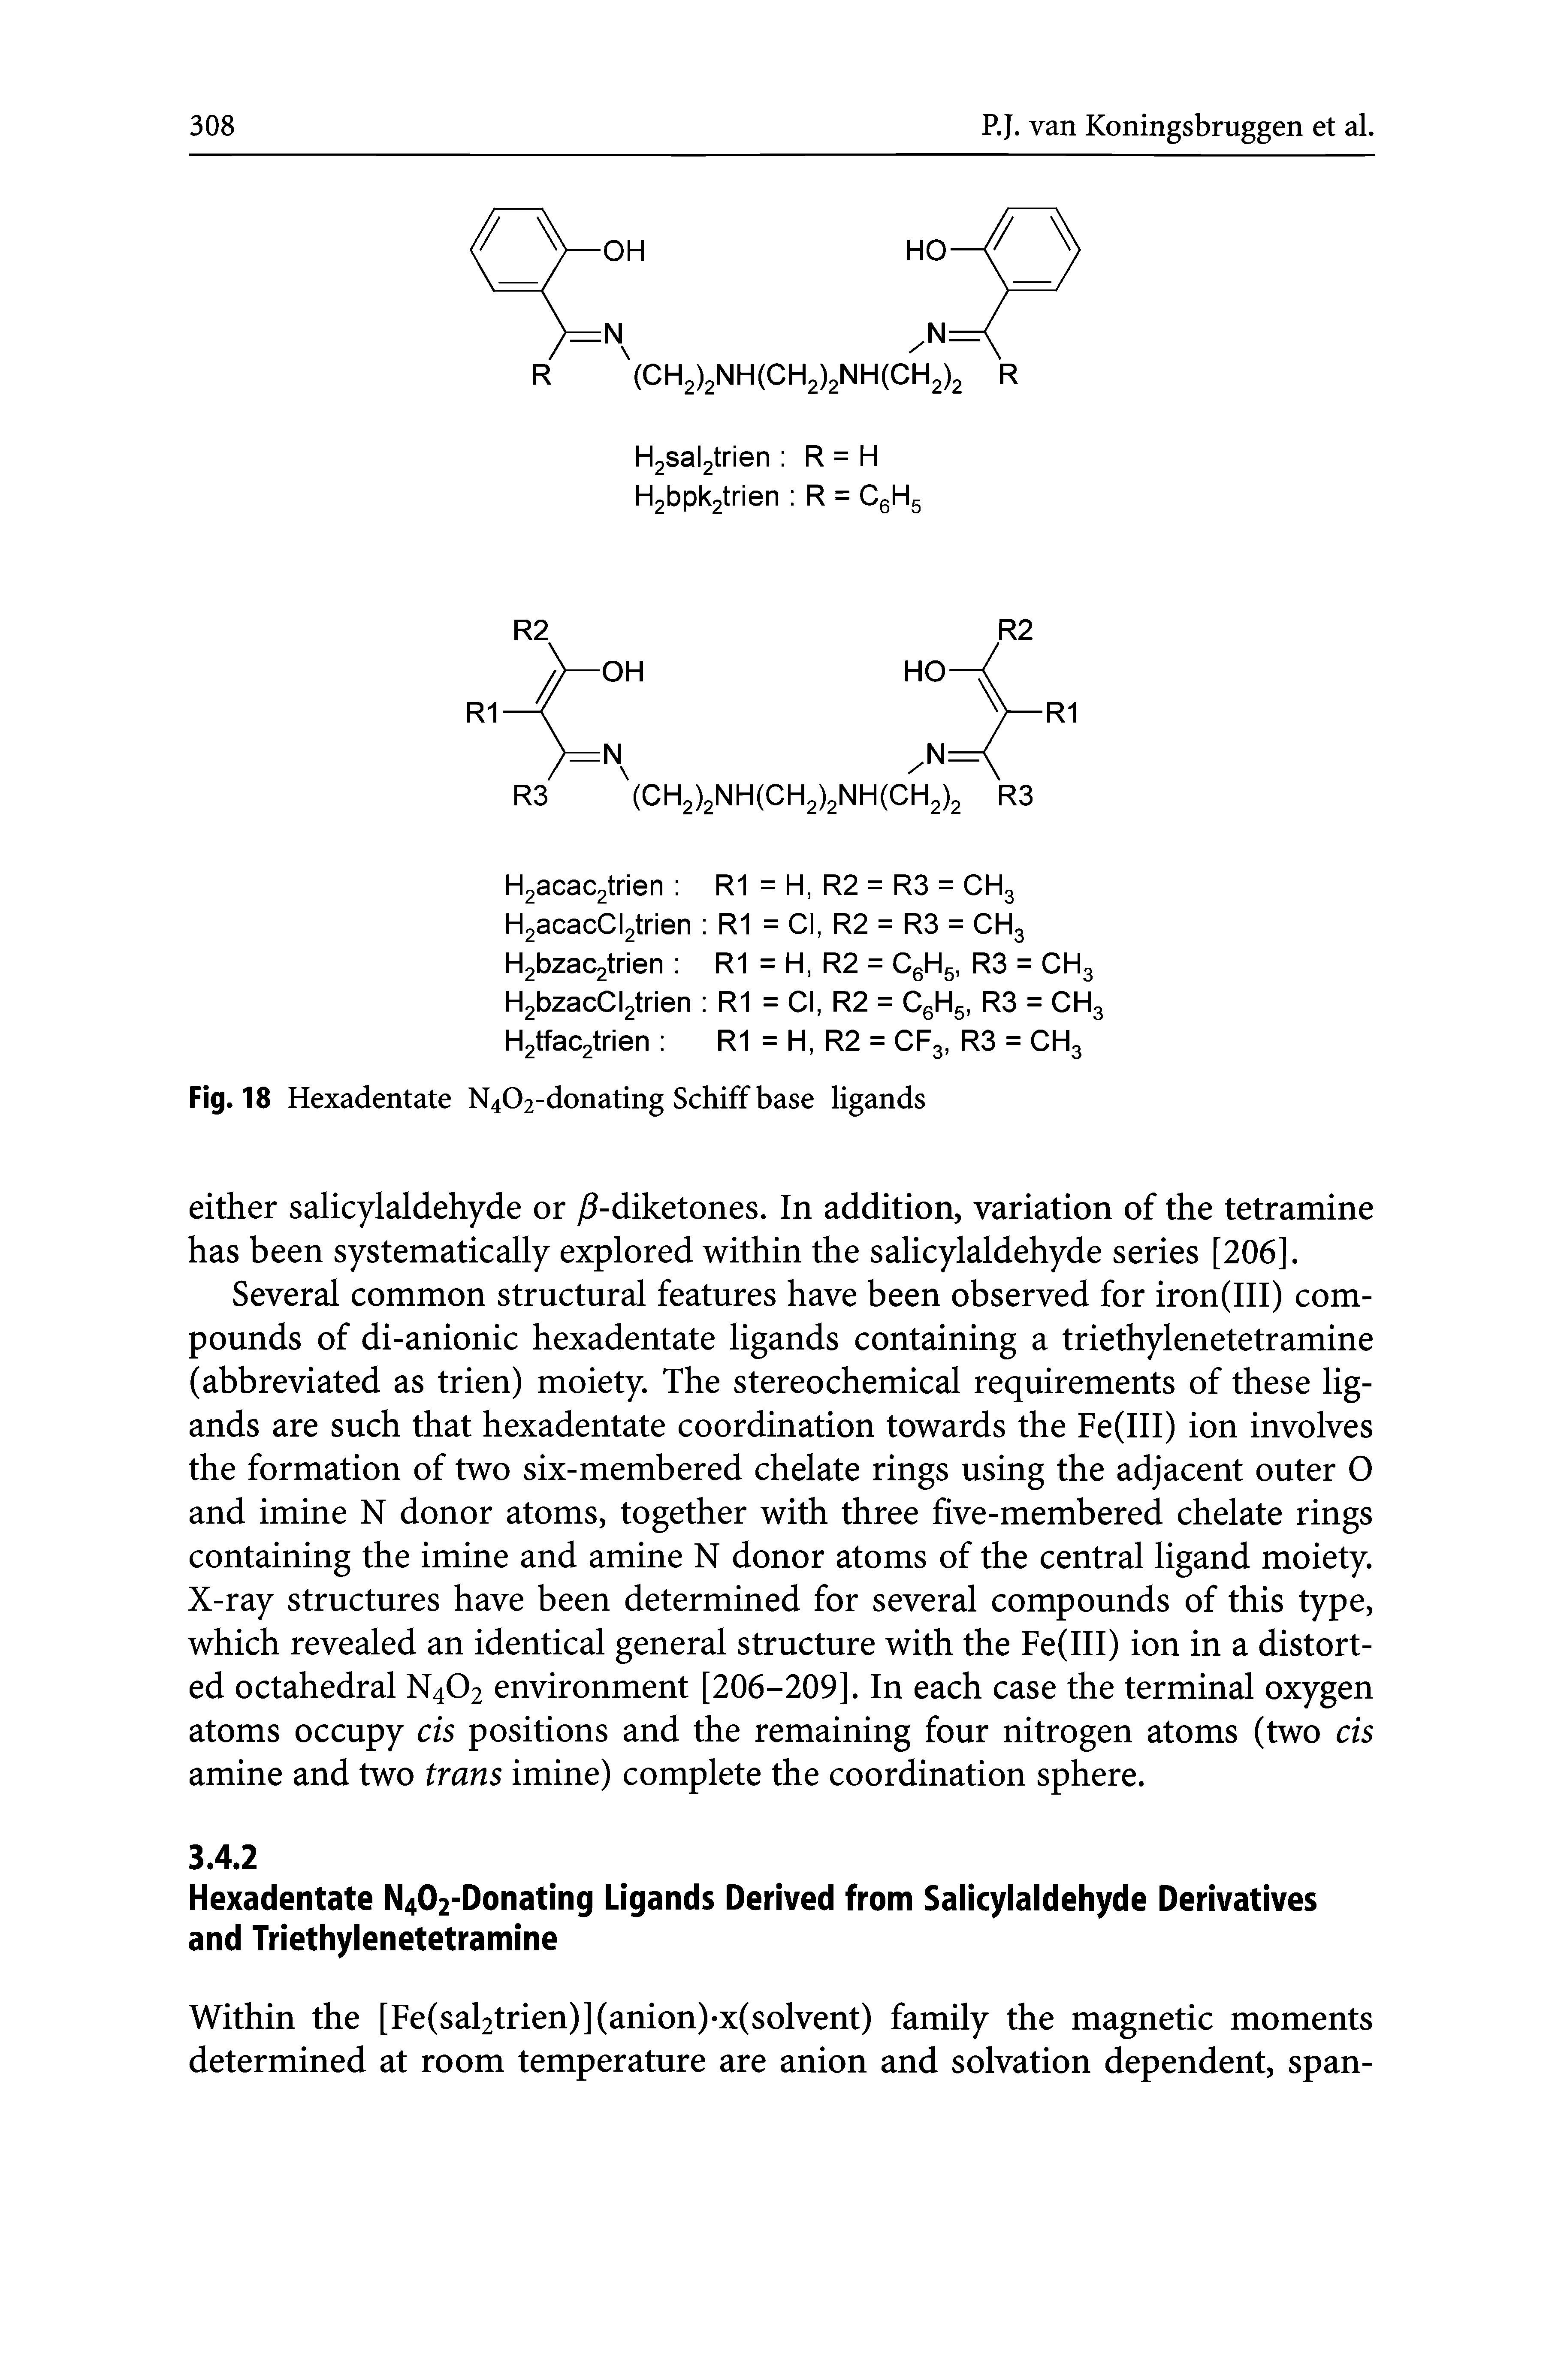 Fig. 18 Hexadentate N402-donating Schiff base ligands...